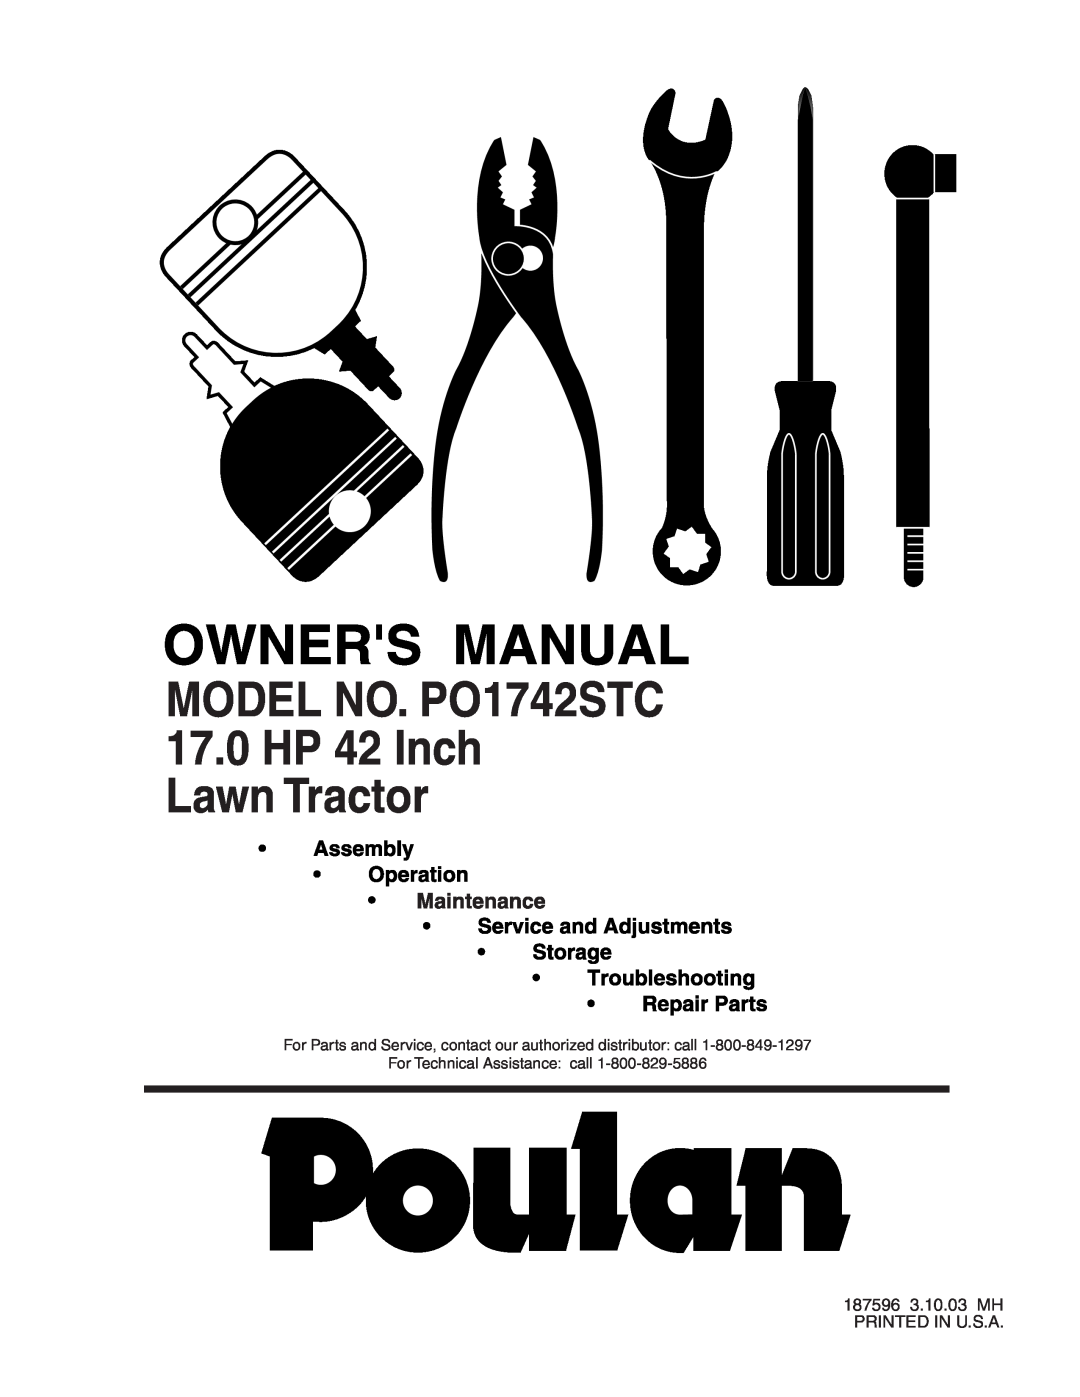 Poulan manual MODEL NO. PO1742STC 17.0 HP 42 Inch Lawn Tractor 